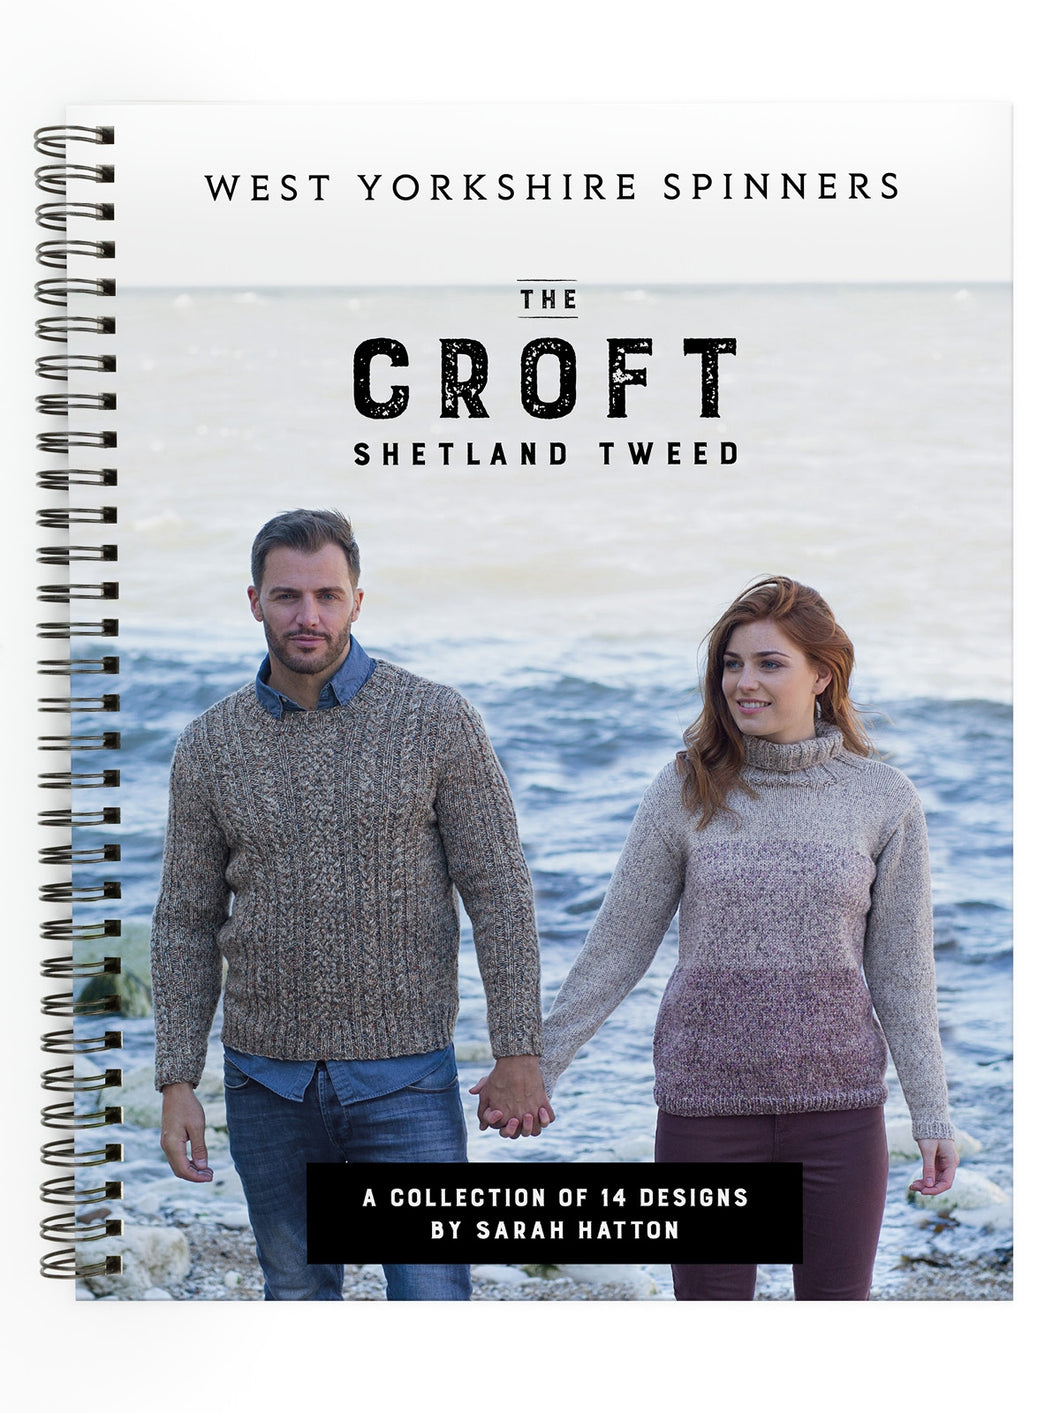 The Croft  - Shetland tweed book